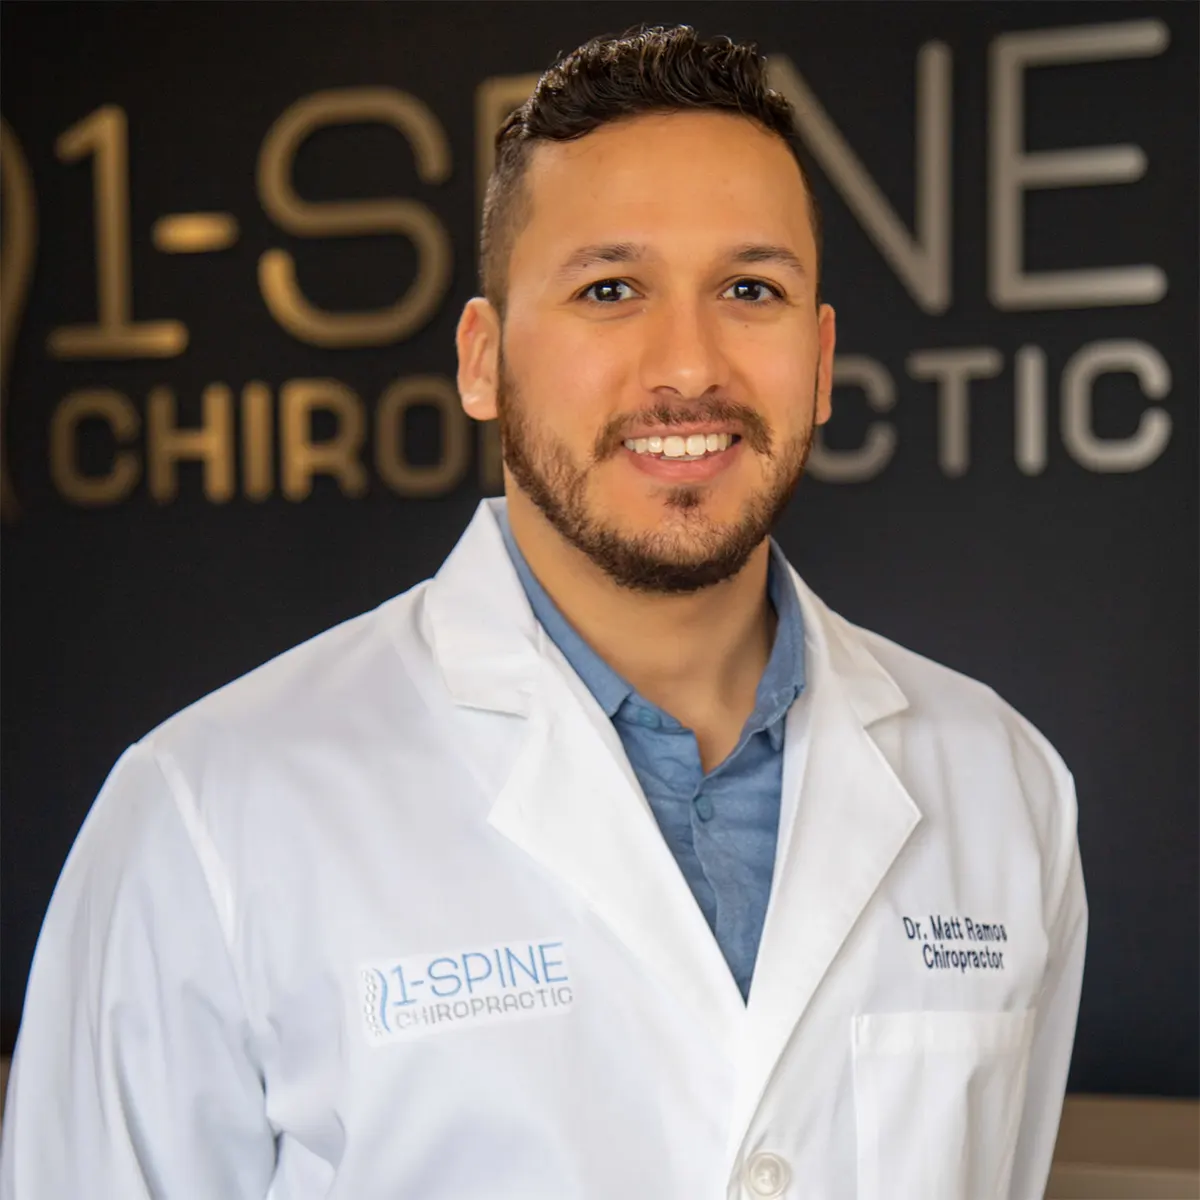 Dr. Matt Ramos Chiropractor of 1-Spine Chiropractic Lubbock Levelland TX